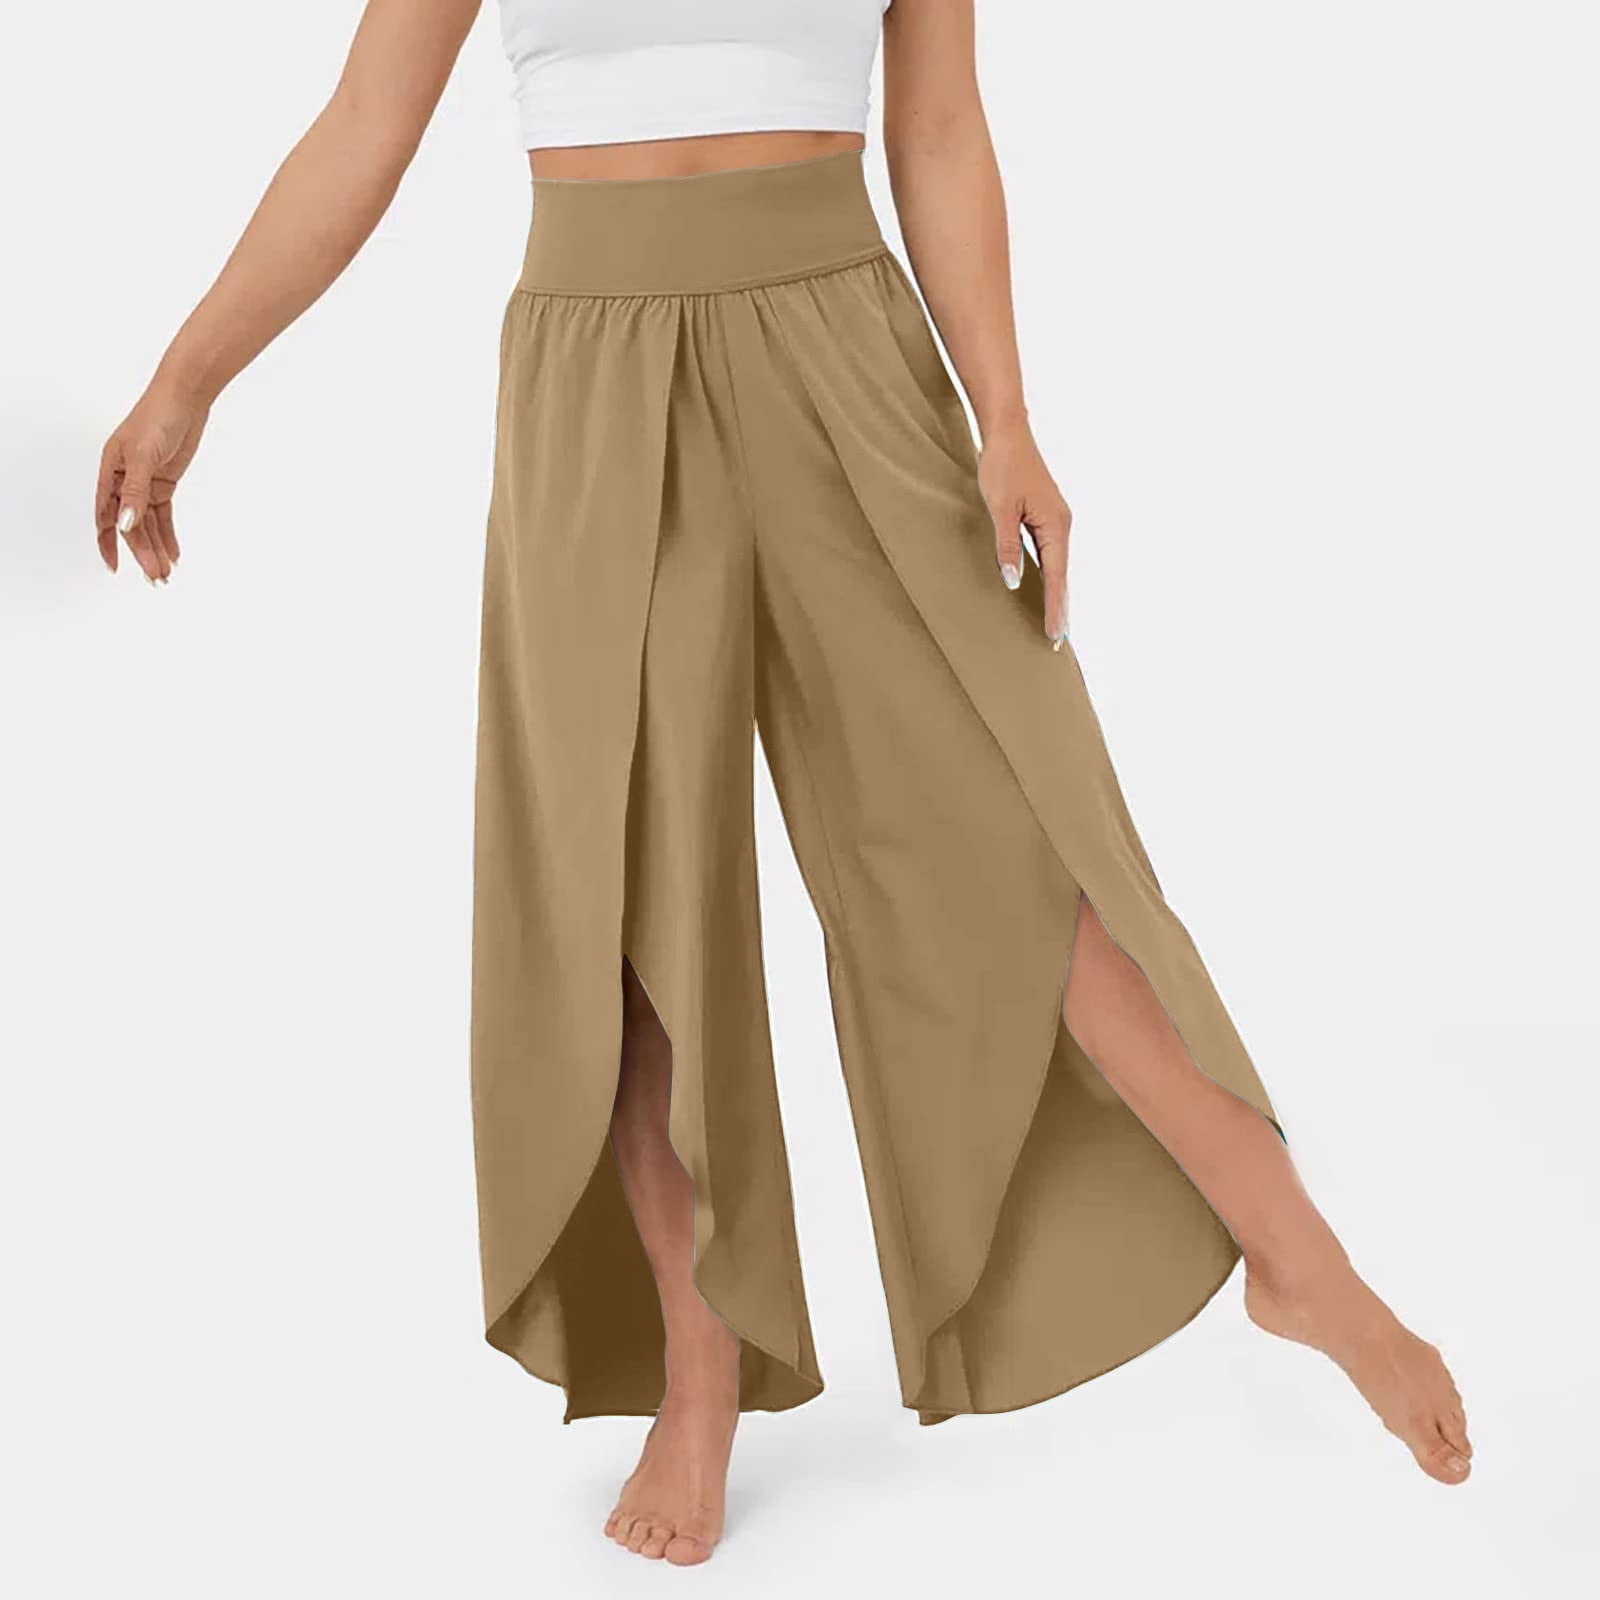 Pastel Khaki Beige Double Layered Linen Palazzo Pants | Beige |  Split-Skirts-Pants, XL-Plus, Misses, Yoga, Vacation, Beach, Solid